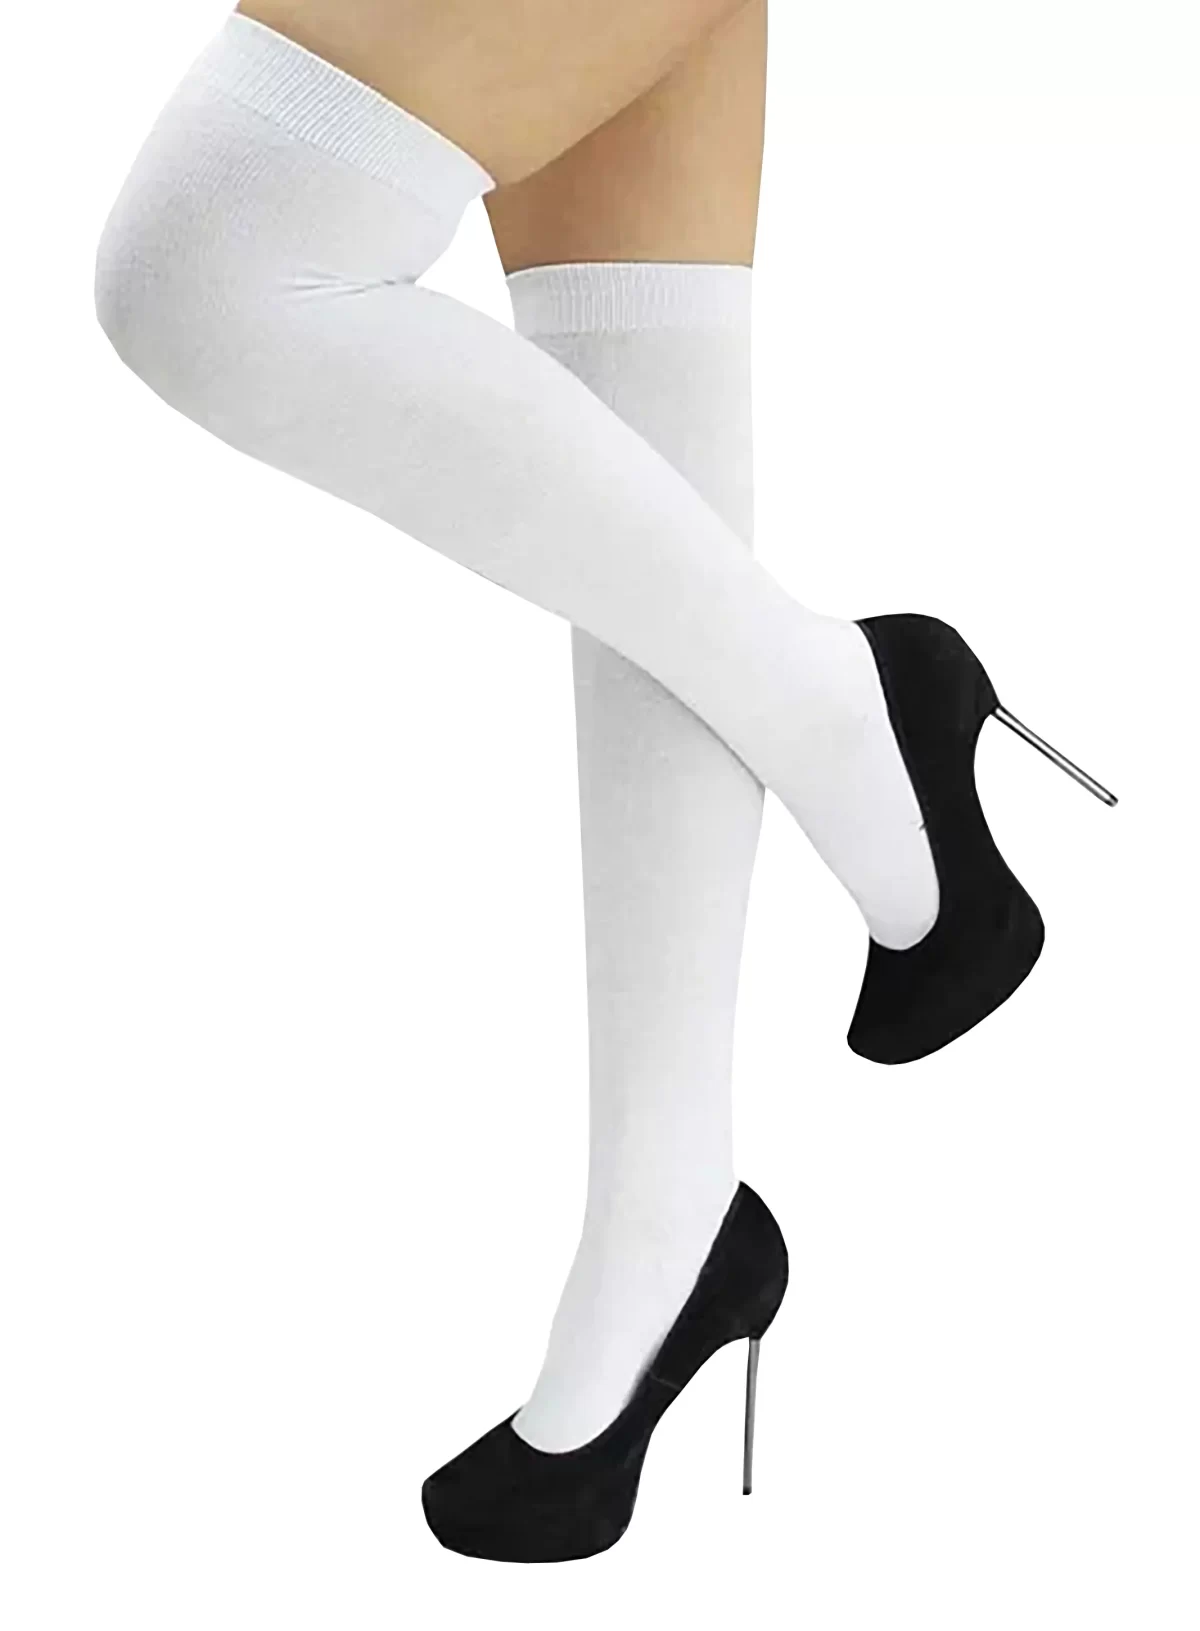 White Girls and Women's Thigh High Stocking/Socks ( Free Size )2